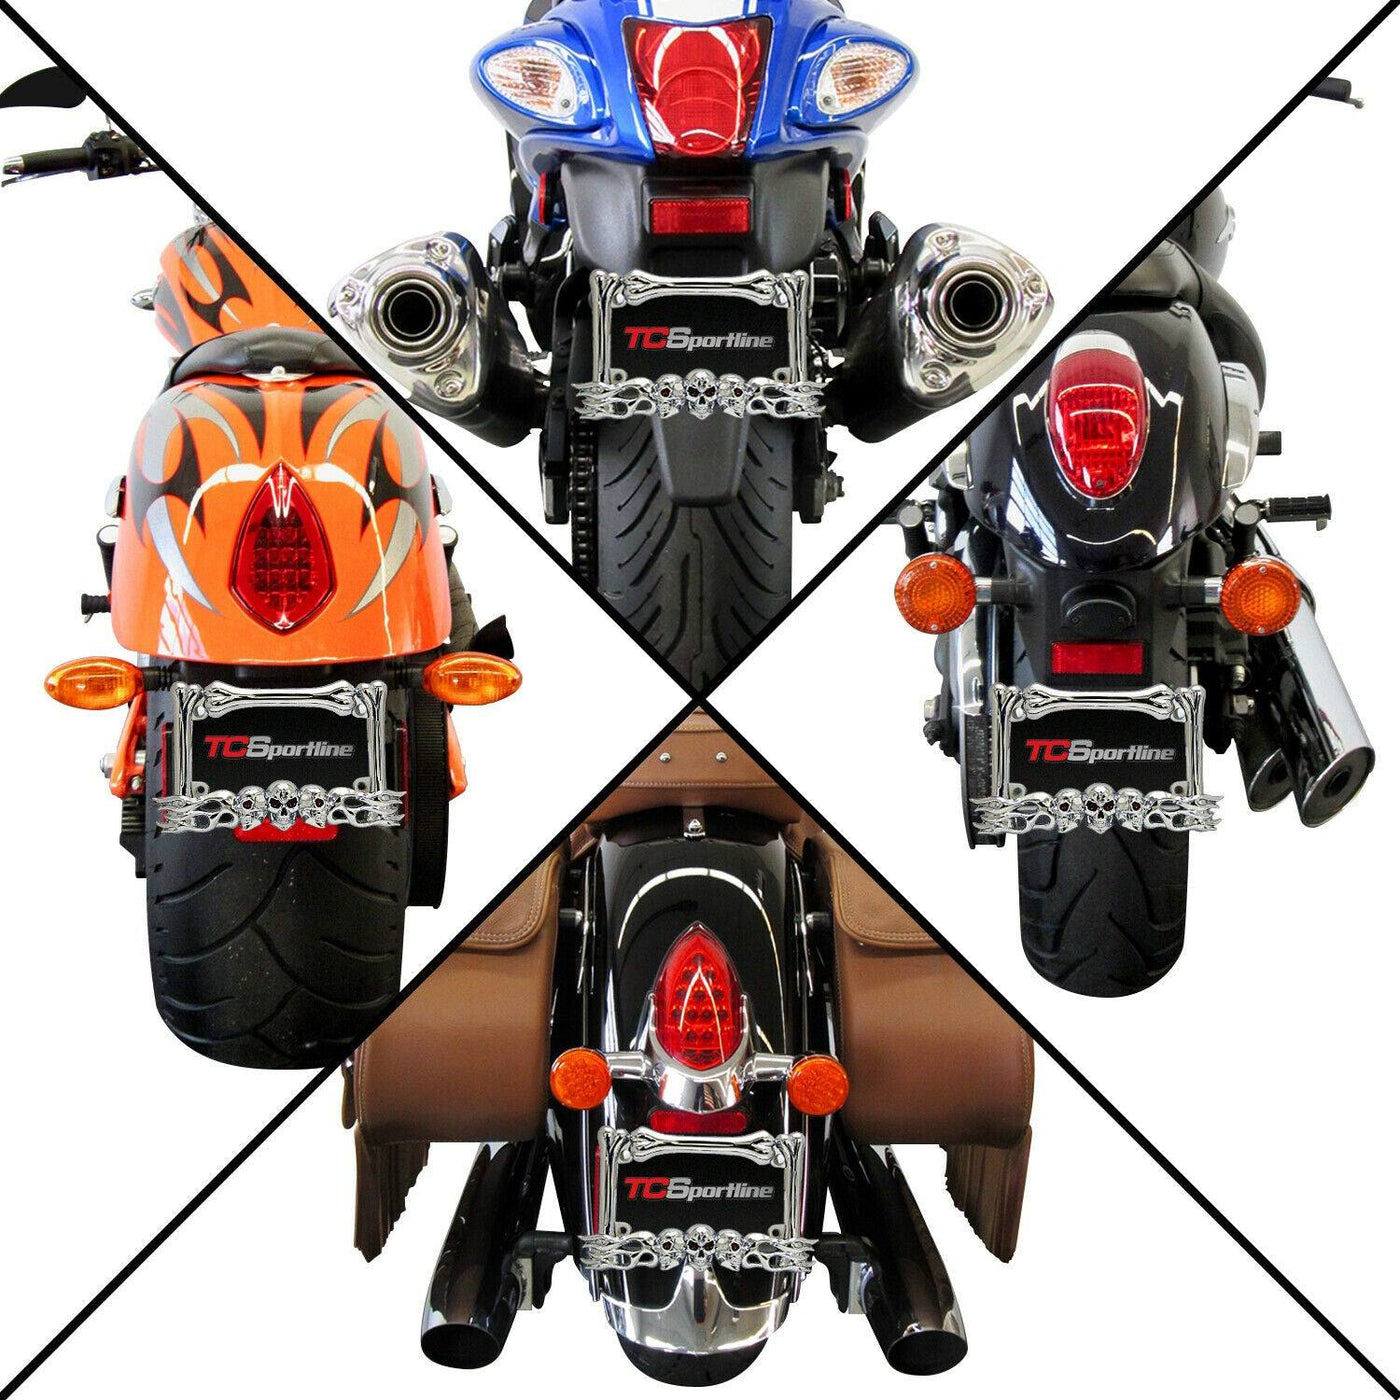 3D SKULL FLAME BONES CHROME MOTORCYCLE LICENSE PLATE FRAME FOR HARLEY-DAVIDSON - Moto Life Products